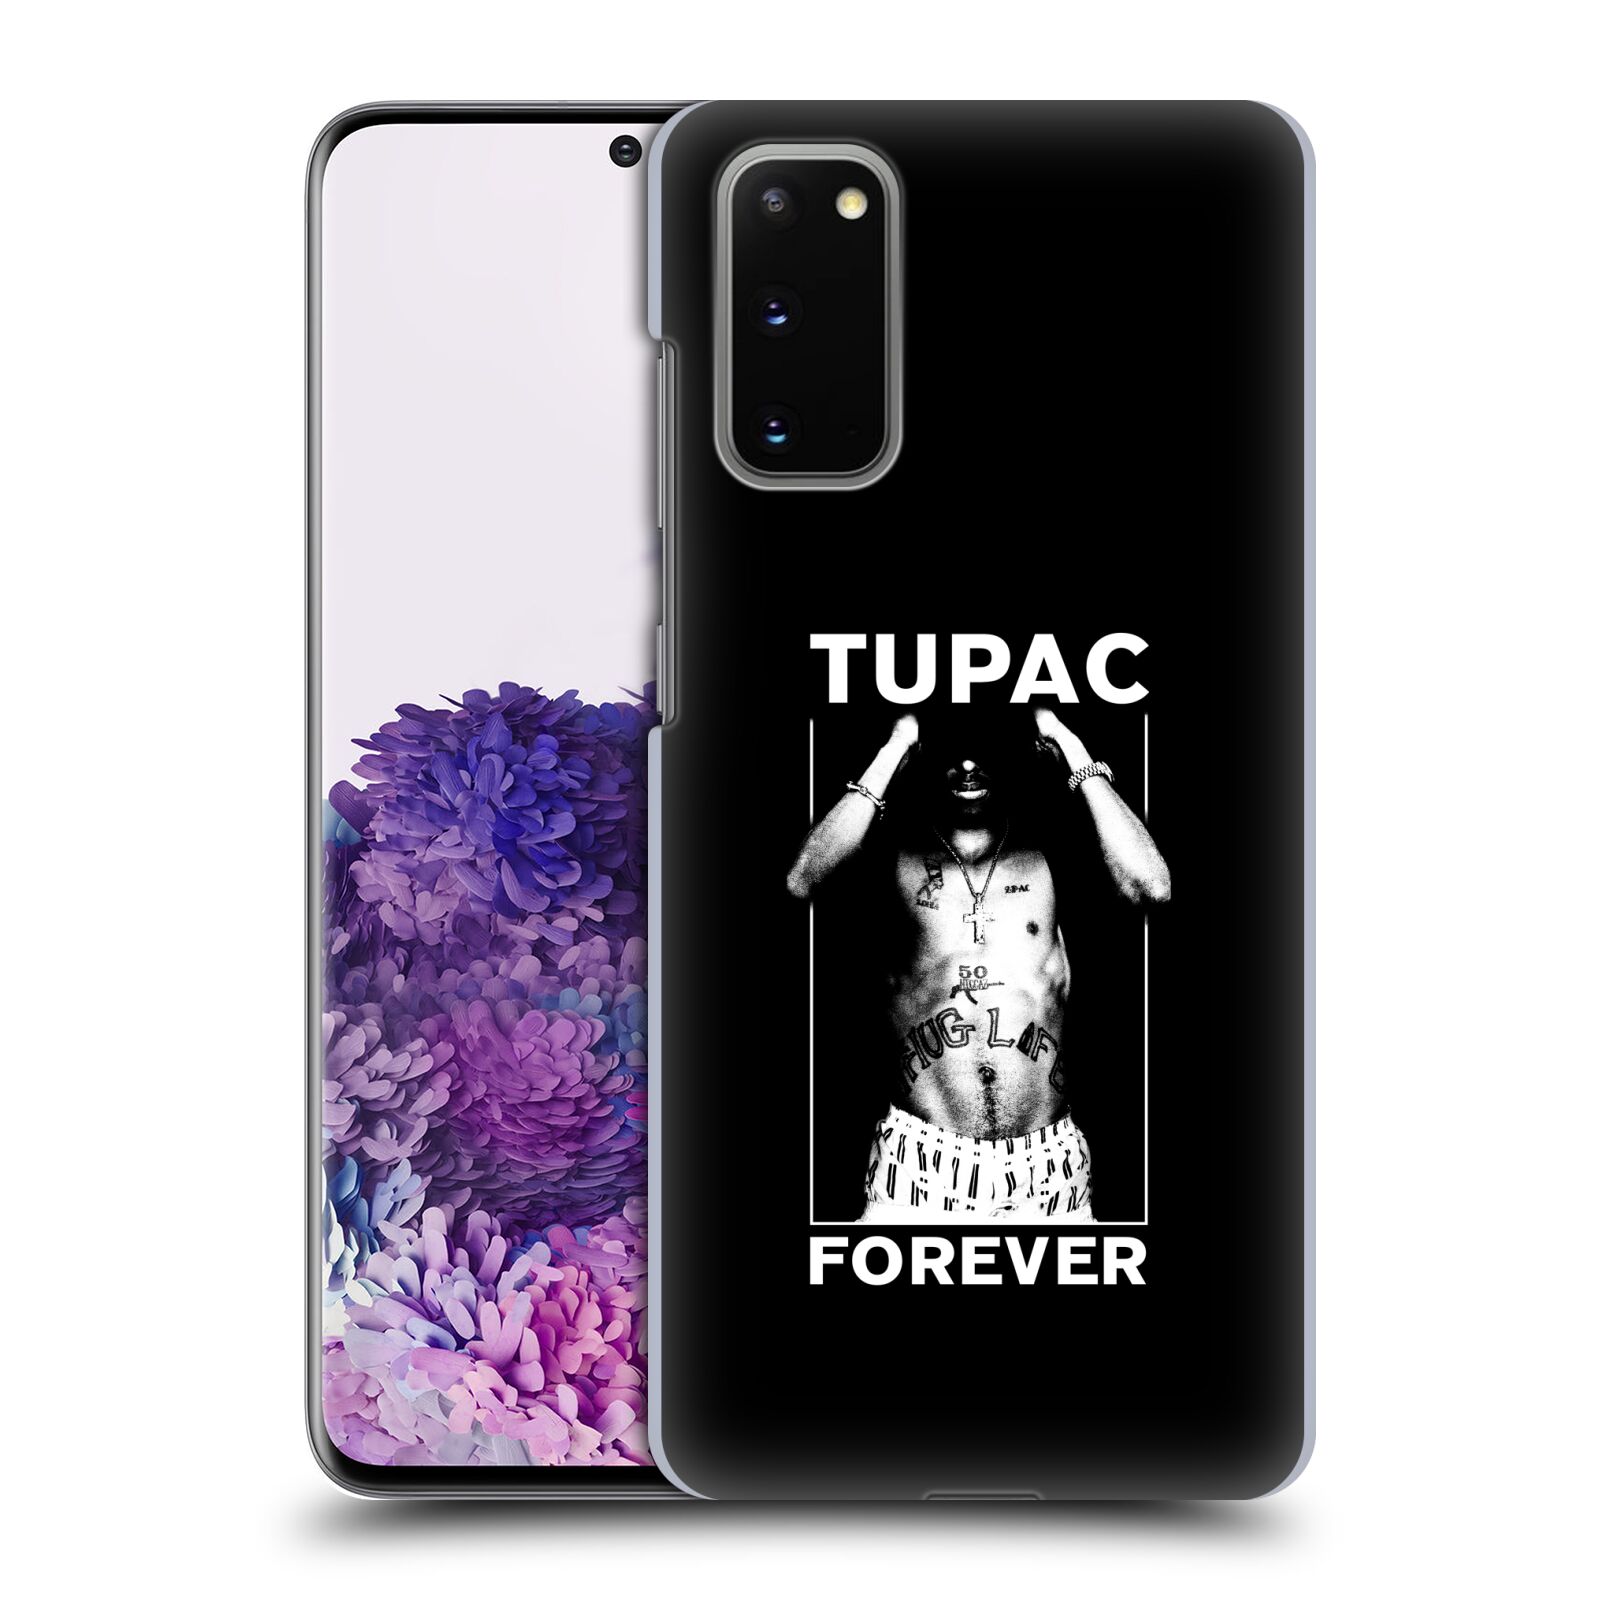 Pouzdro na mobil Samsung Galaxy S20 - HEAD CASE - Zpěvák rapper Tupac Shakur 2Pac bílý popisek FOREVER